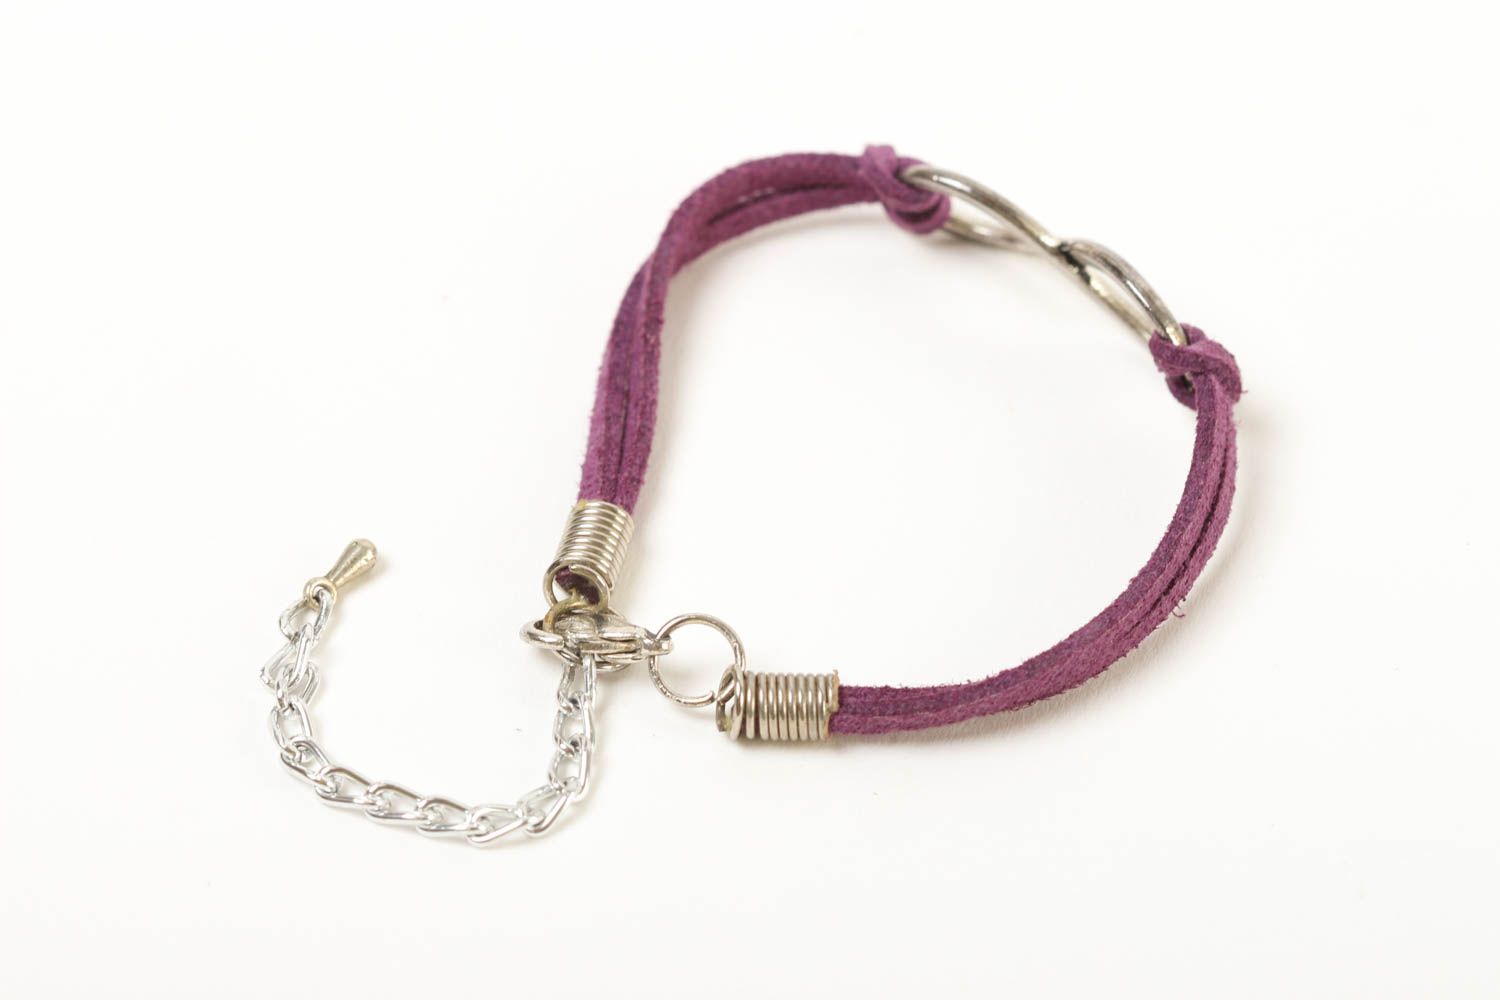 Handmade leather bracelet wrist bracelet with charms artisan jewelry designs photo 4